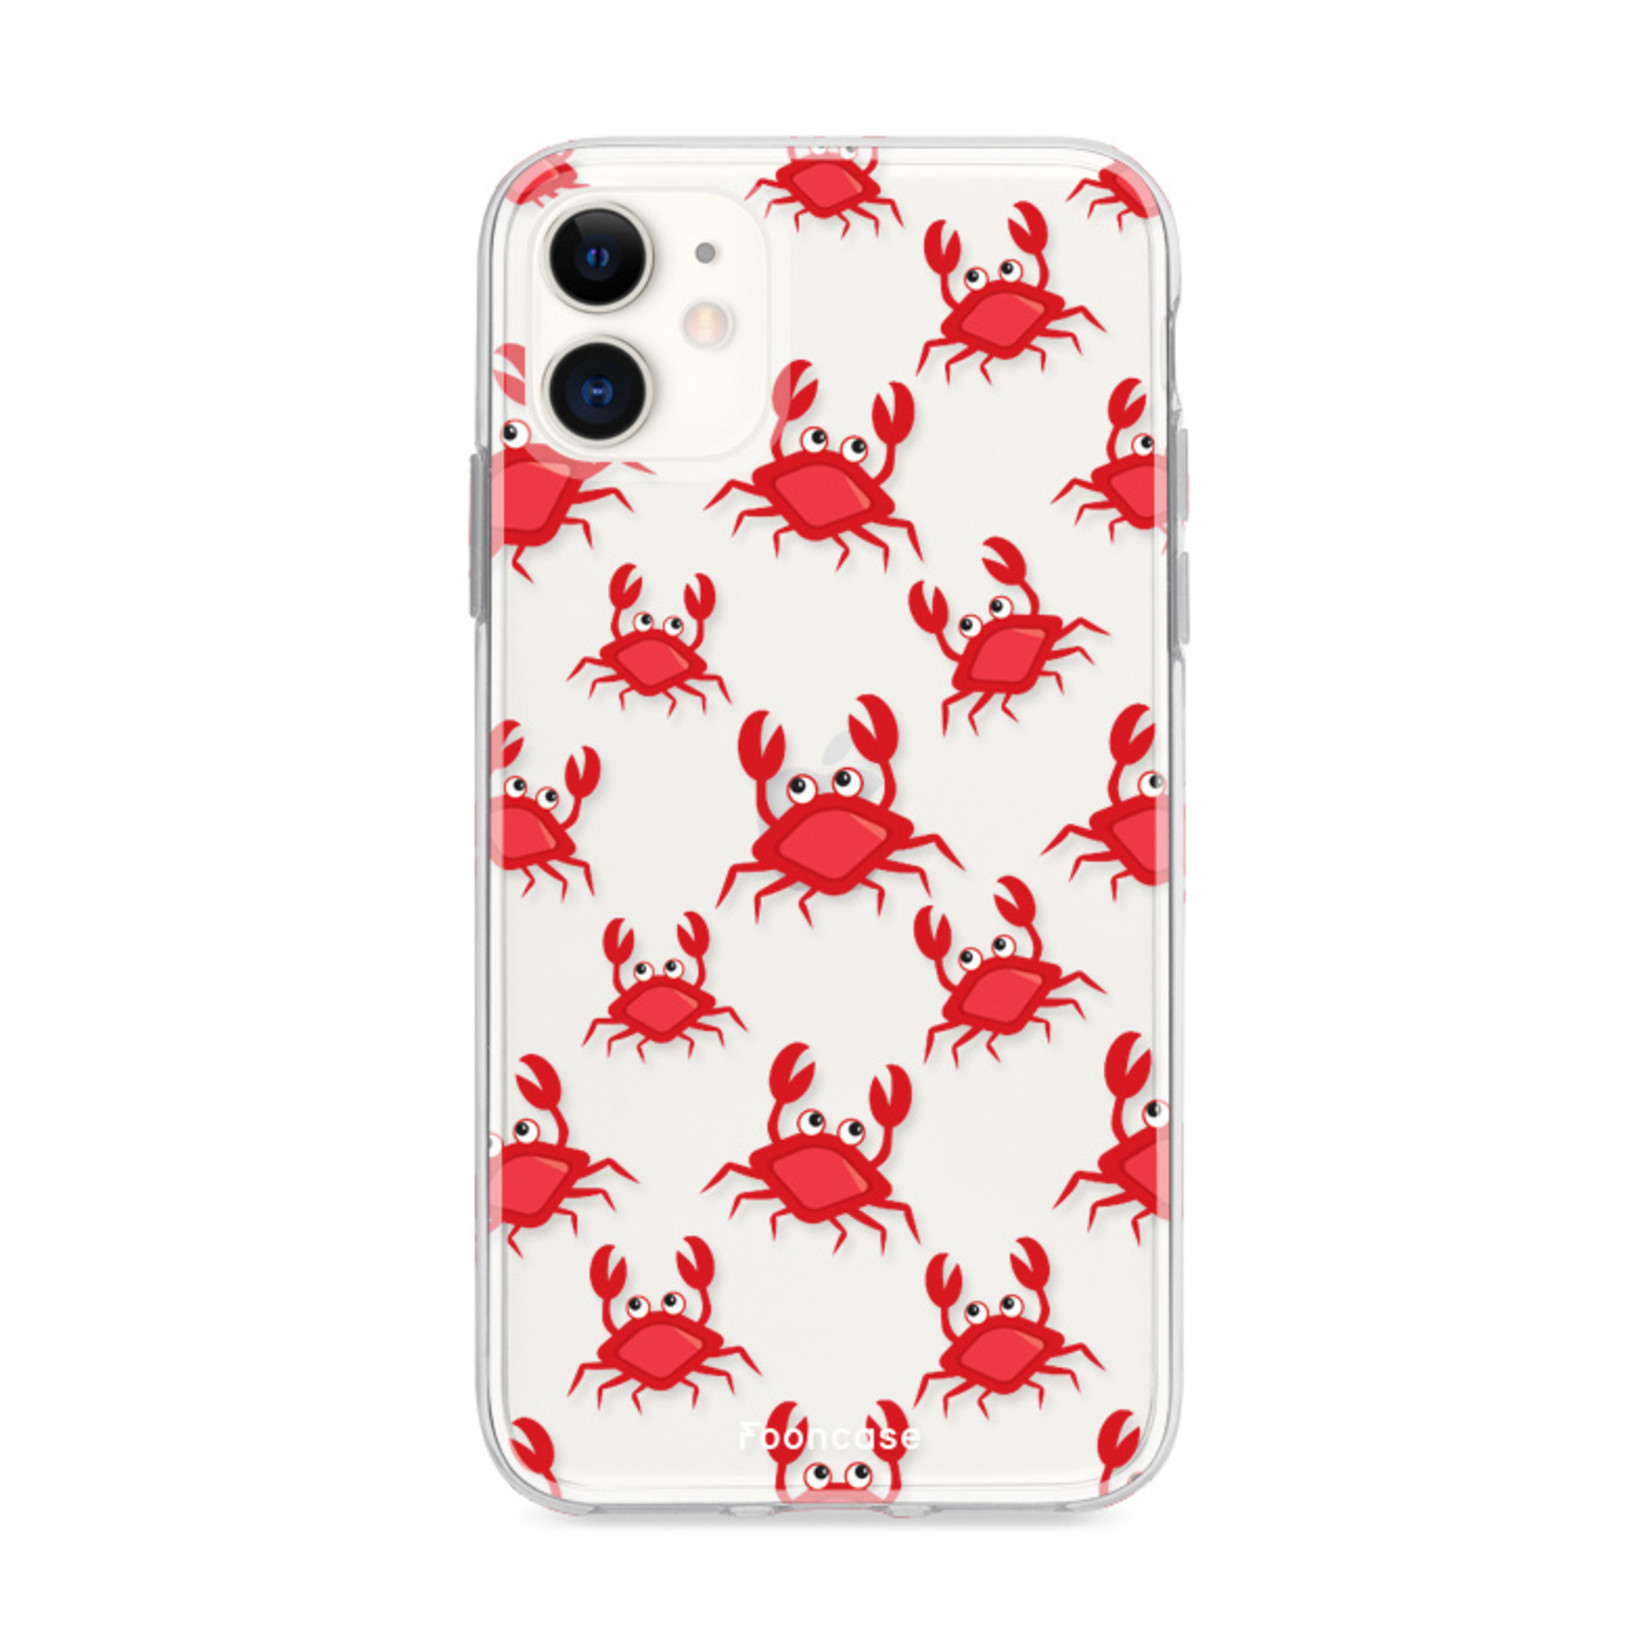 FOONCASE iPhone 11 hoesje TPU Soft Case - Back Cover - Crabs / Krabbetjes / Krabben